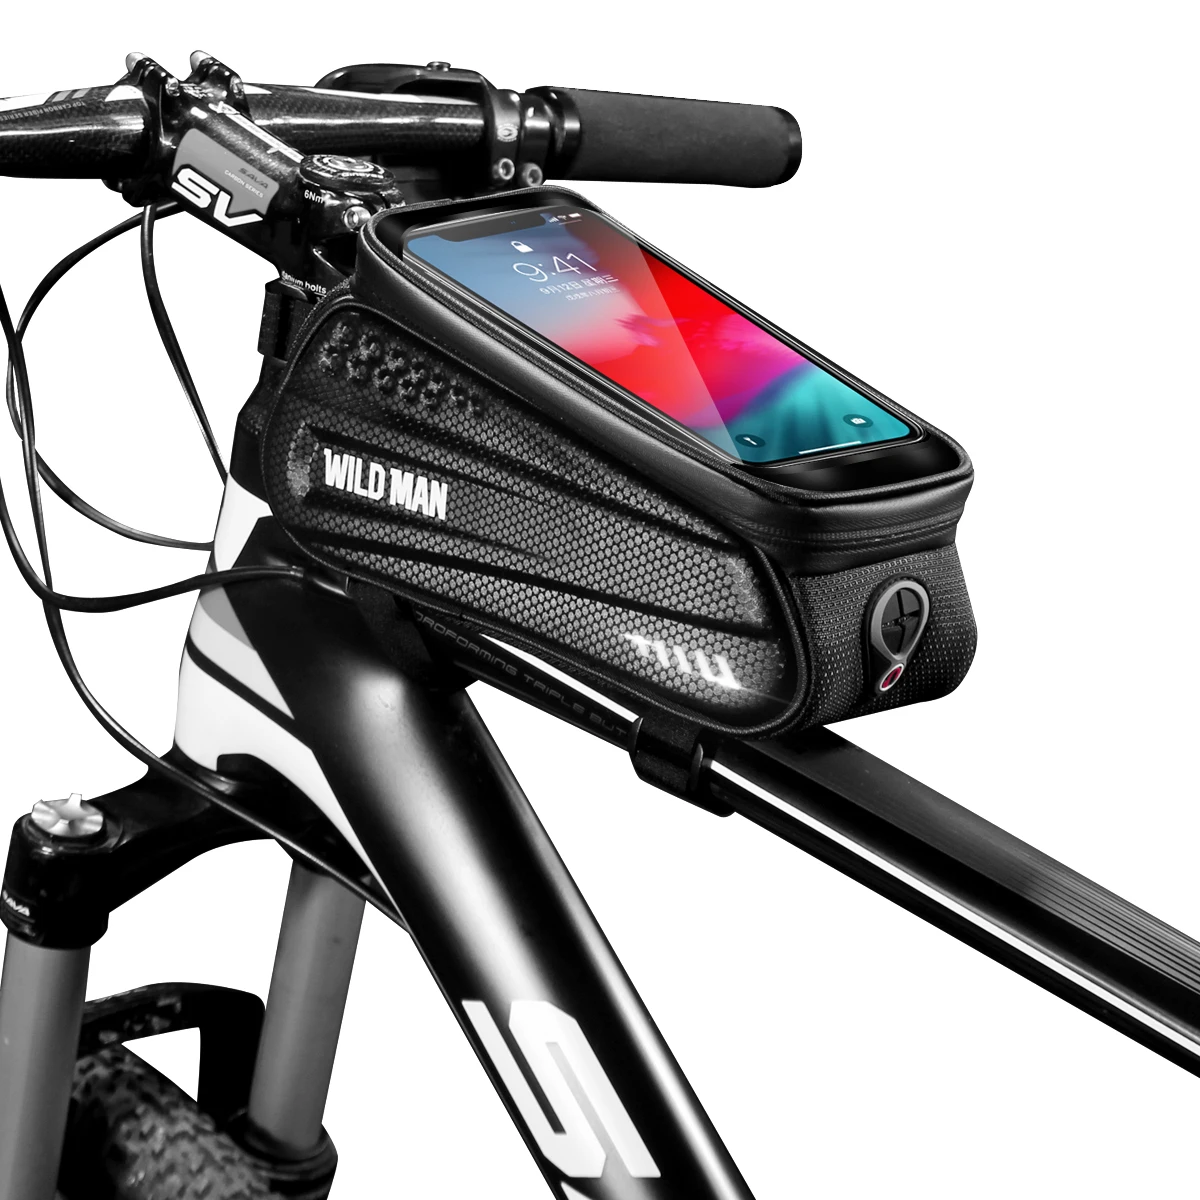 Wild Man Waterproof Bicycle Bag Phone Pouch Holder Cycling Bike Frame Bag bike Water proof 1L Riding bag